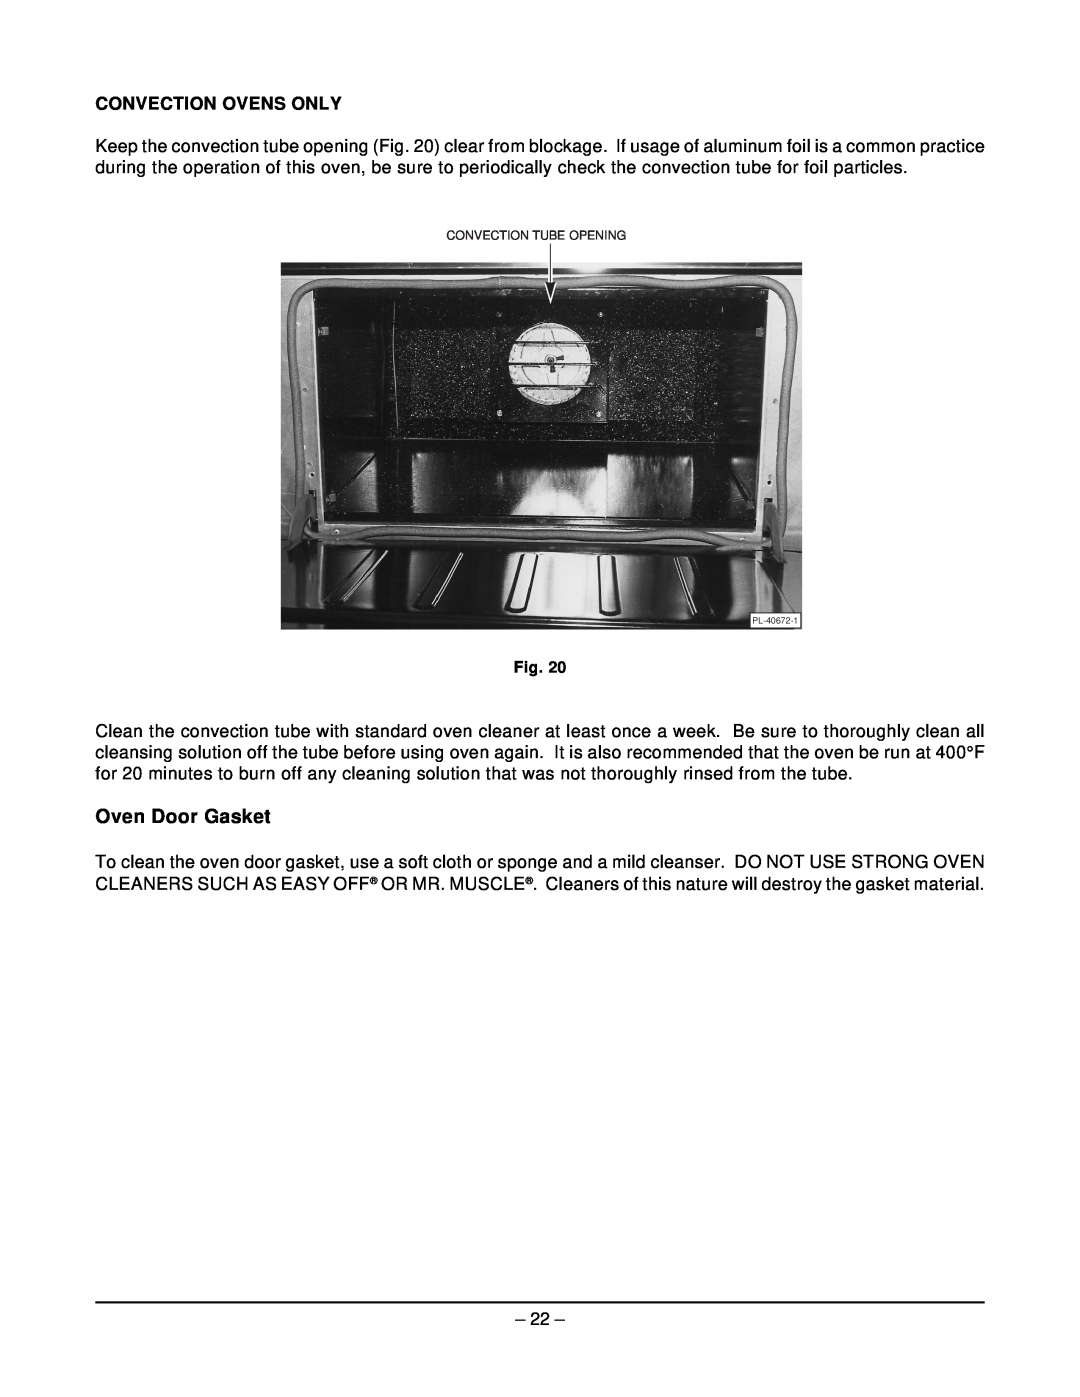 Hobart MGR36C manual Oven Door Gasket, Convection Ovens Only 